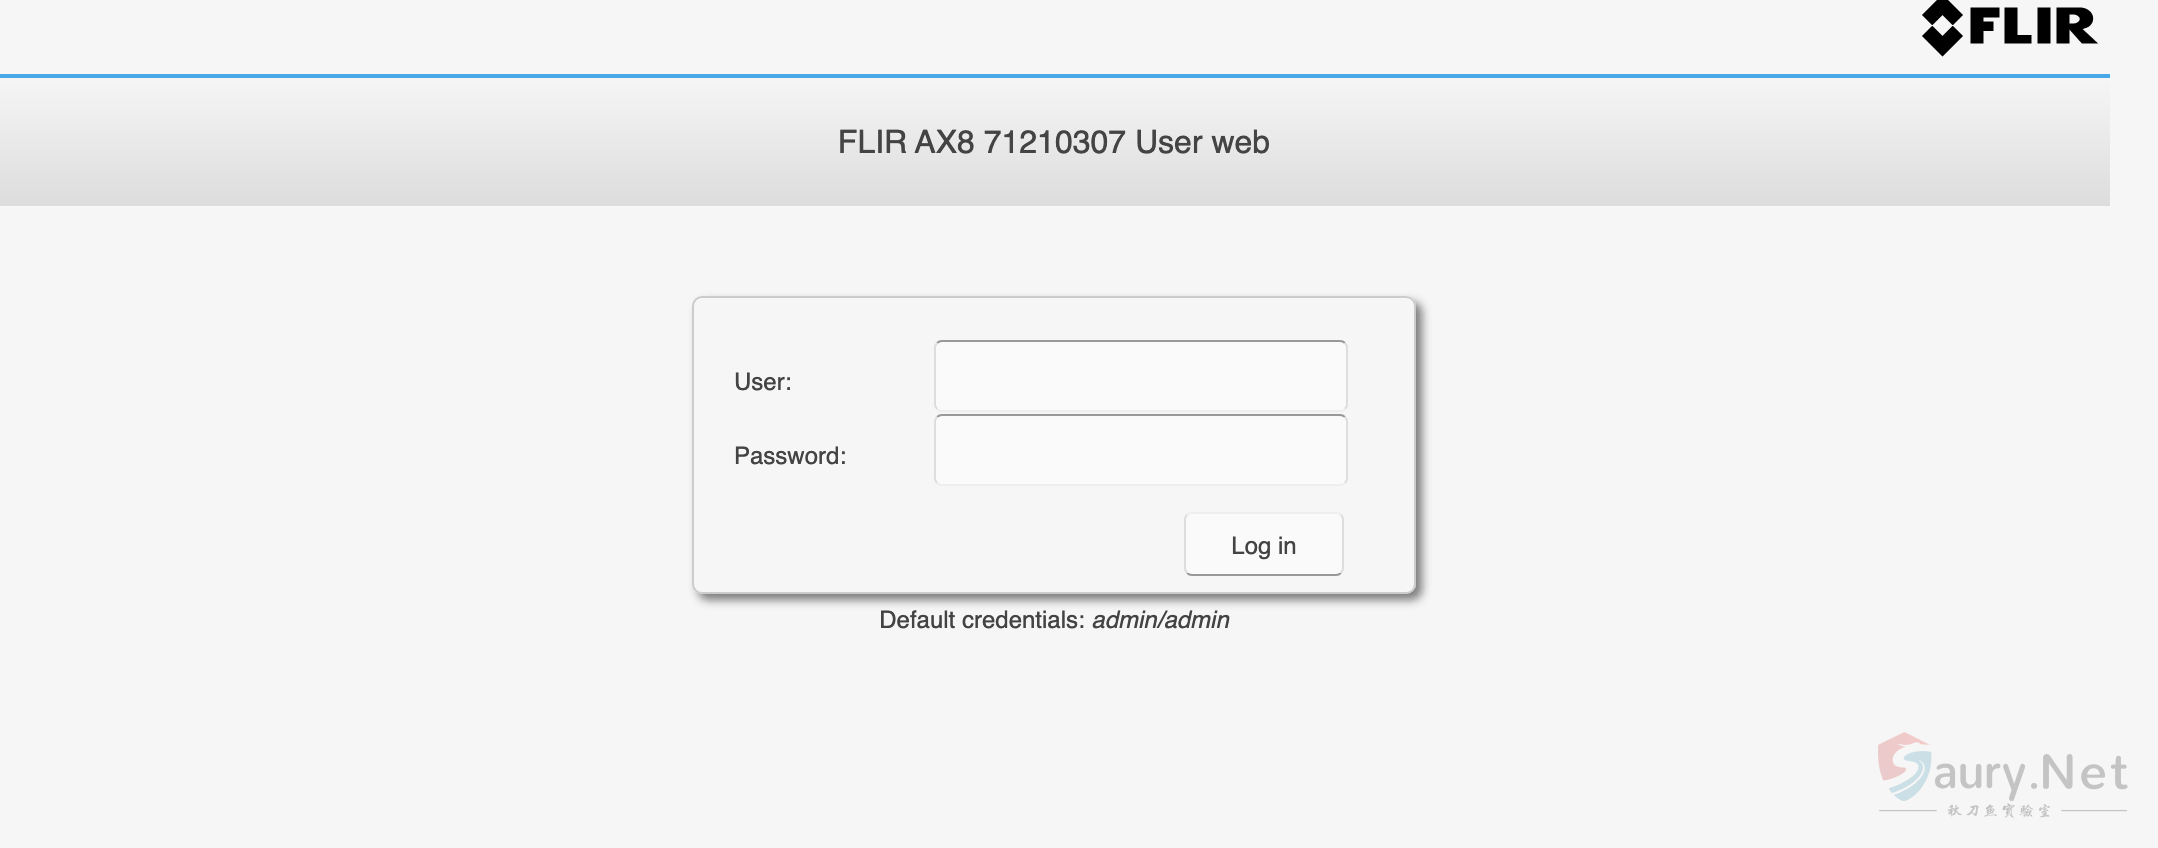 FLIR-AX8 download.php 任意文件下载-秋刀鱼实验室